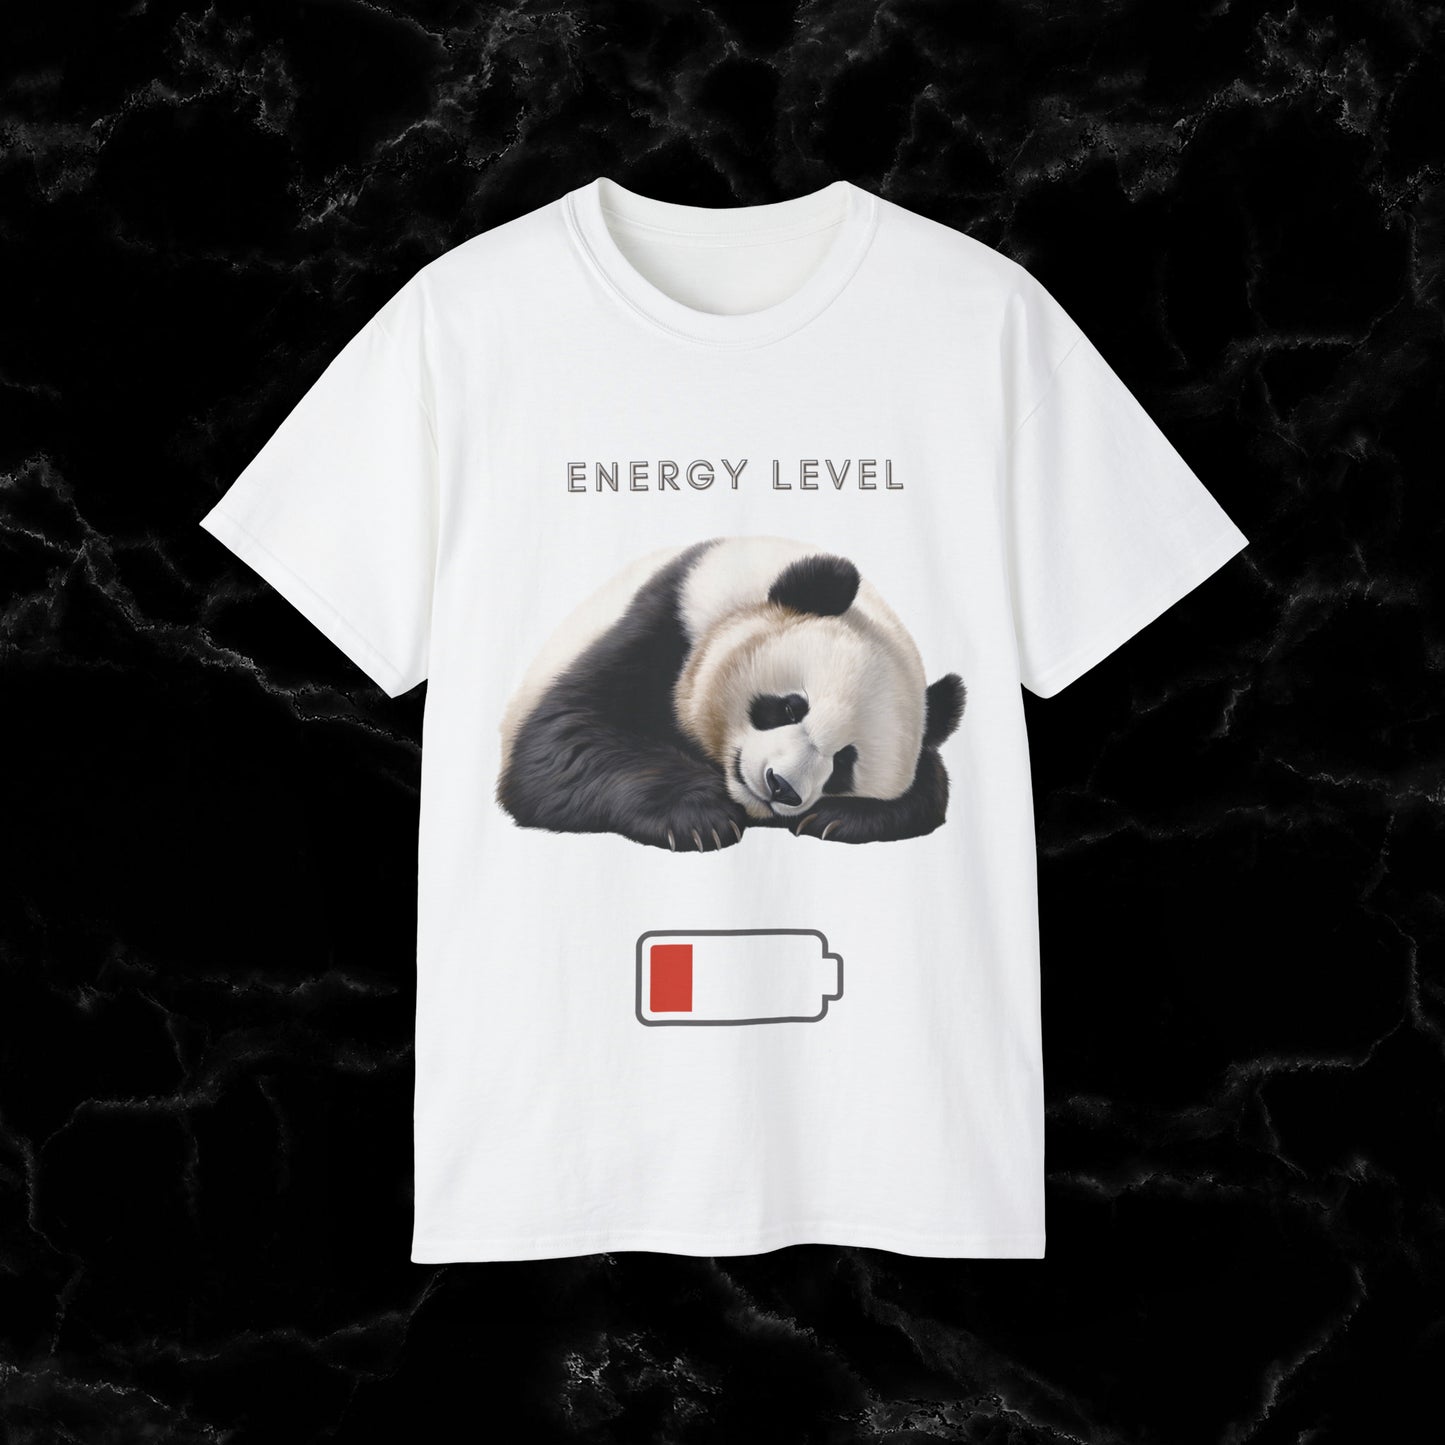 Nap Time Panda Unisex Funny Tee - Hilarious Panda Nap Design - Energy Level T-Shirt White S 